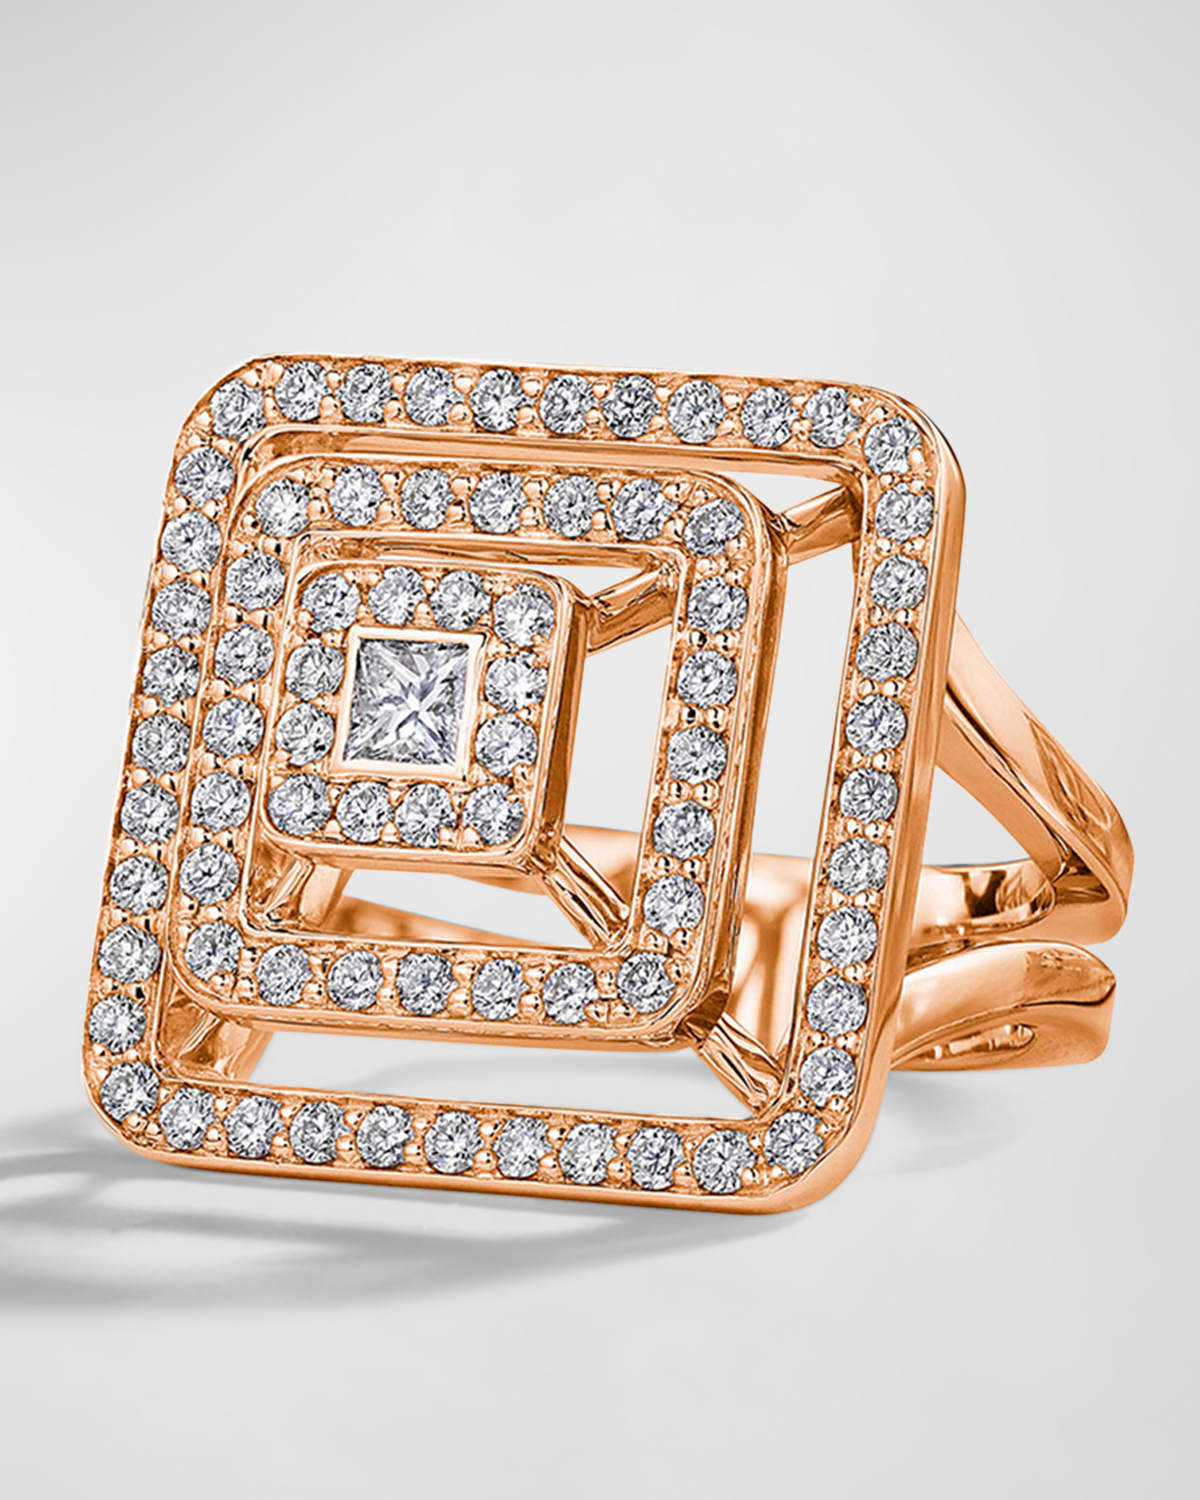 Mimi So Piece 18k Rose Gold Diamond Pyramid Ring, Size 6